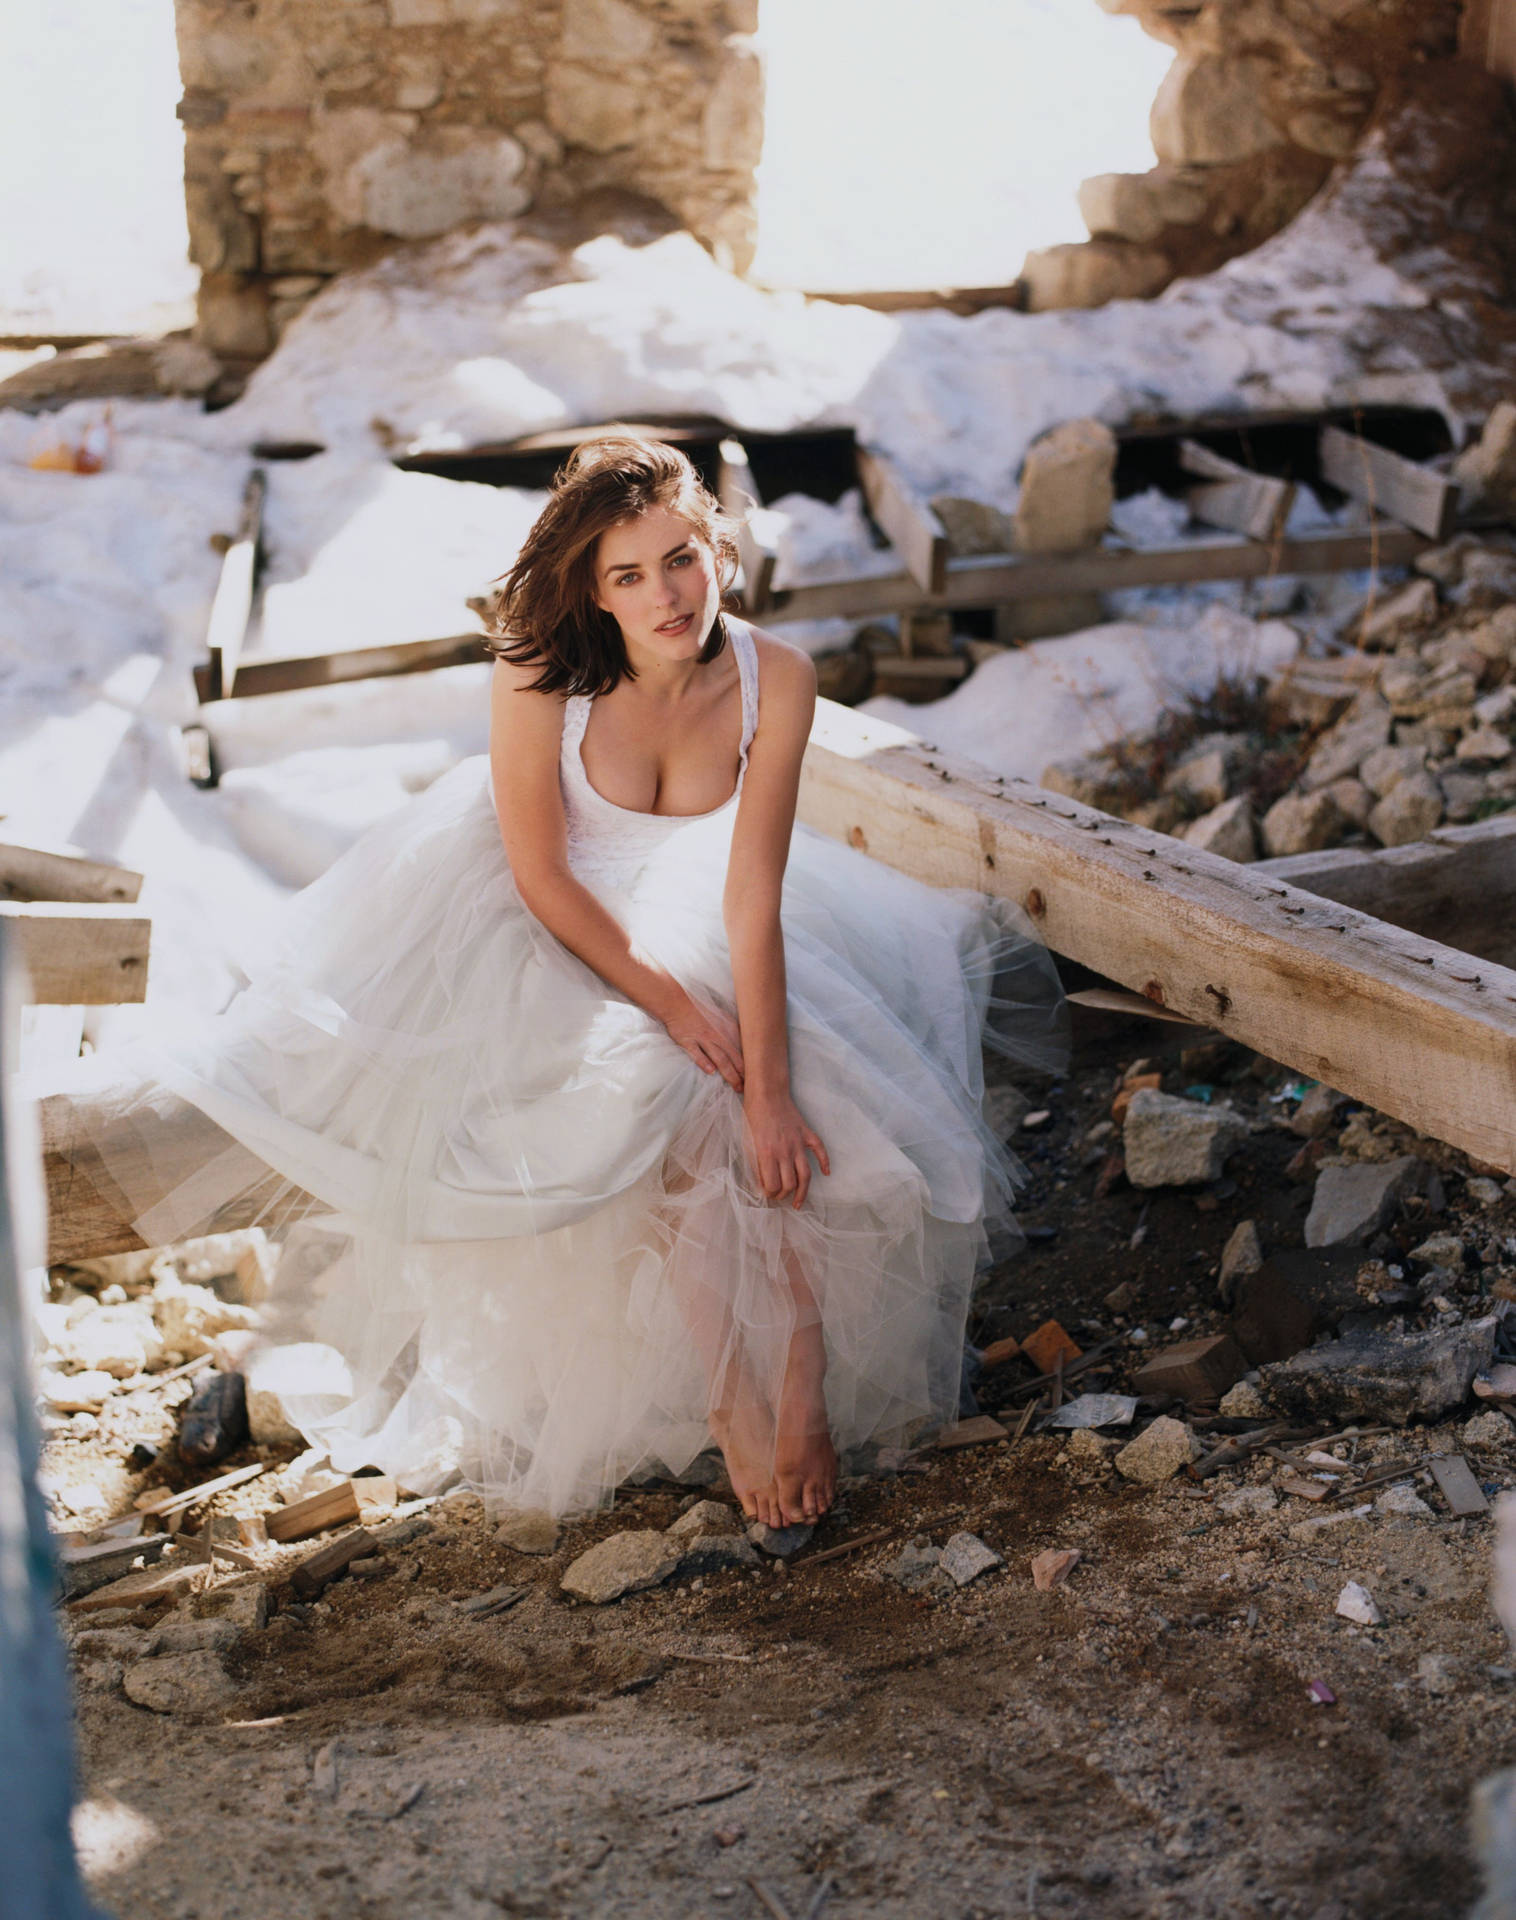 Elizabeth Hurley Photoshoot At Ruins Background